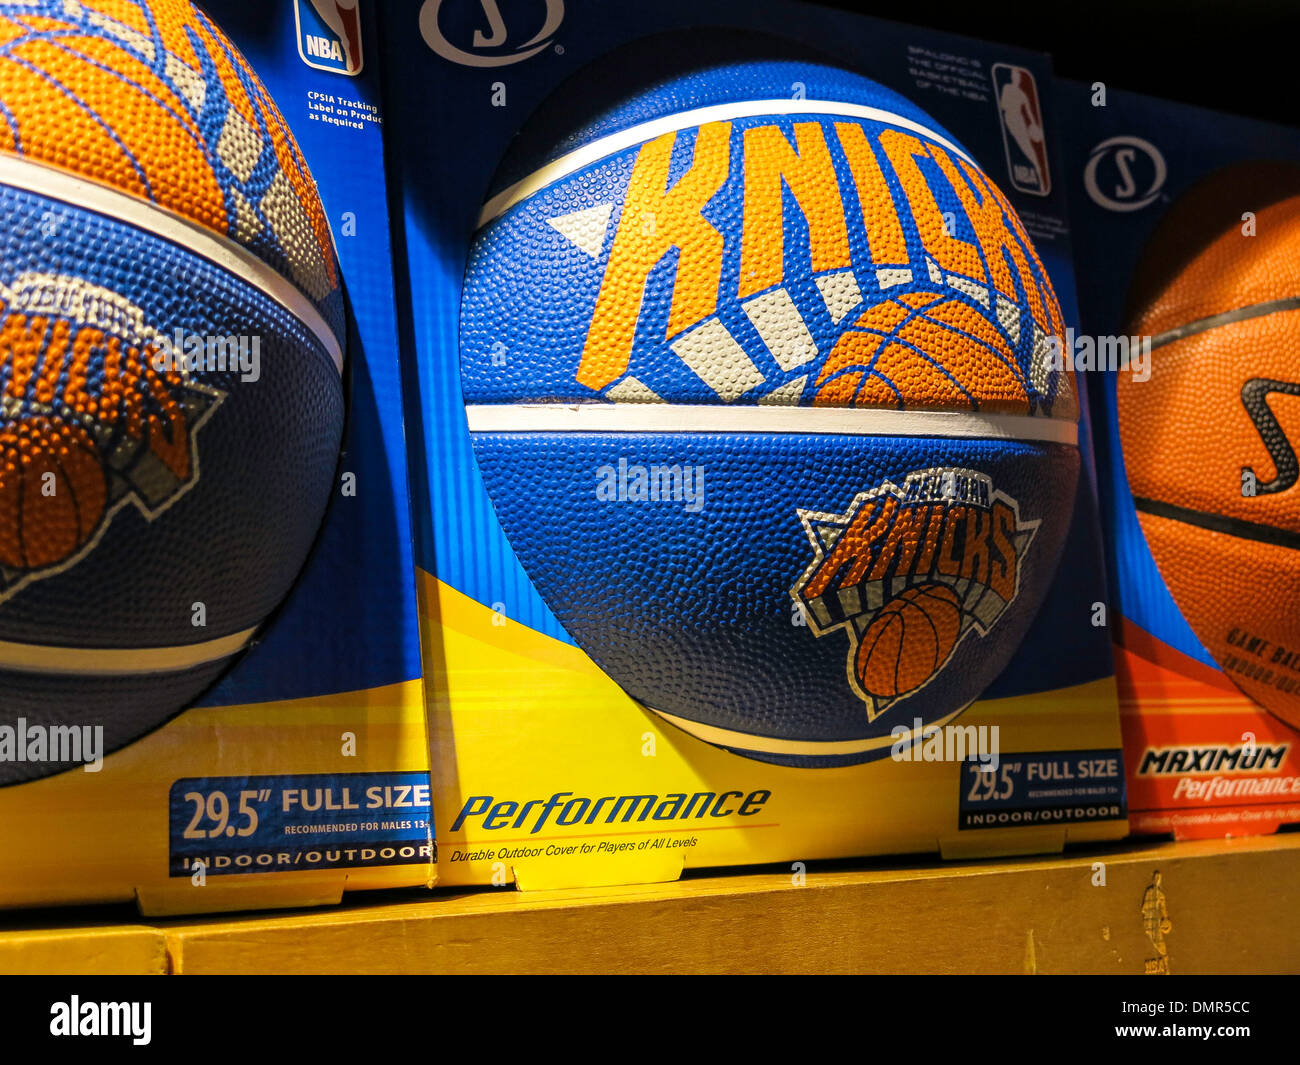 NBA Store Interior, Fifth Avenue, NYC Stock Photo - Alamy